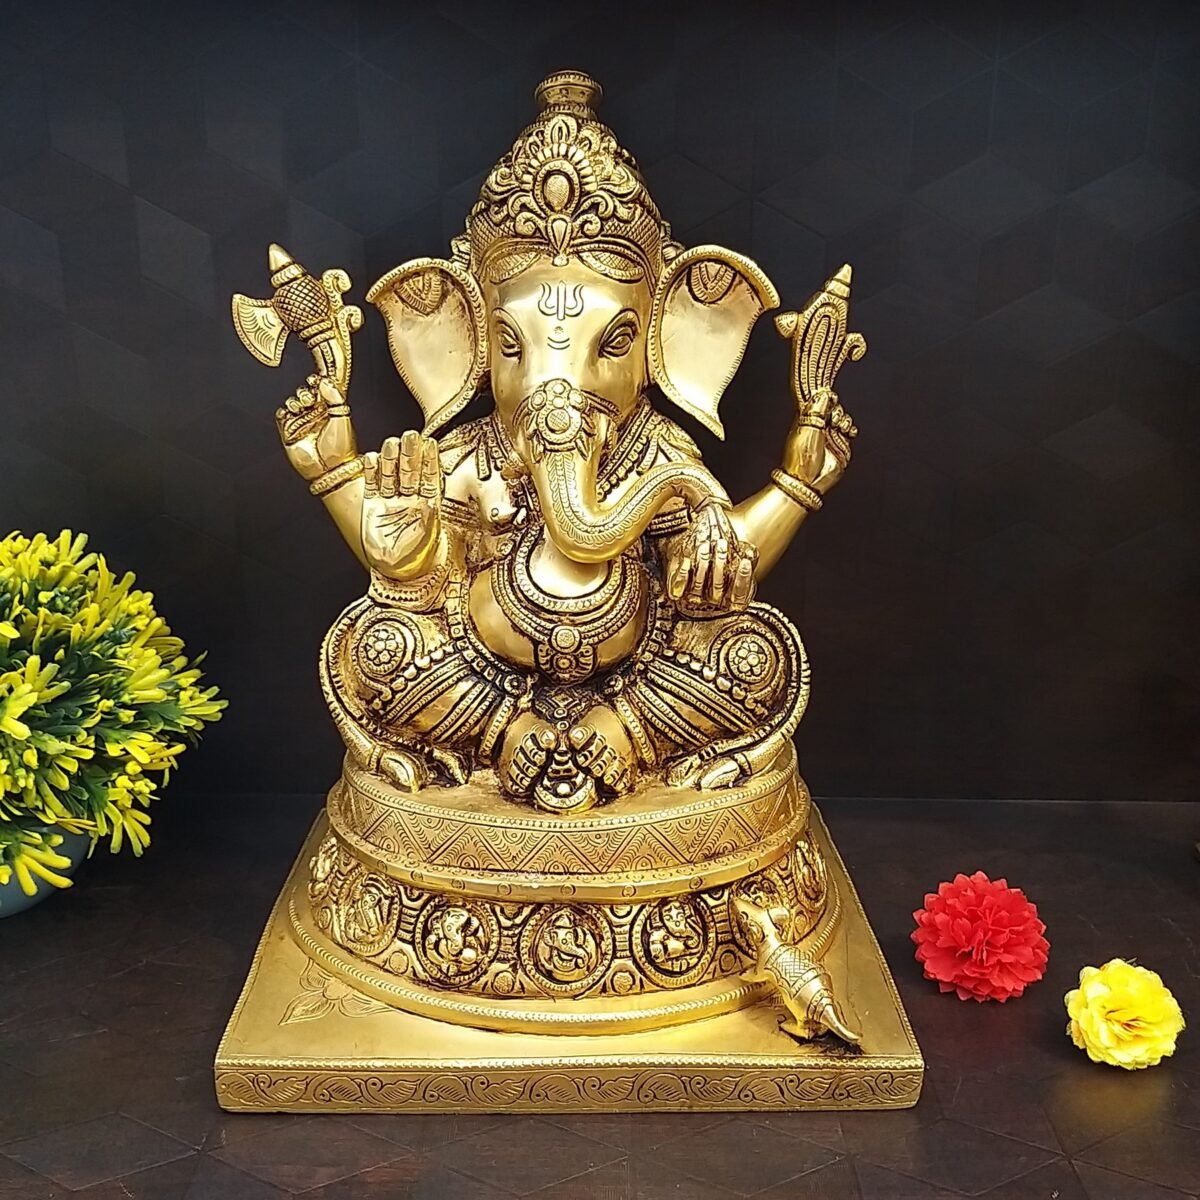 brass ganesha big with small ganesha design idol home decor pooja items hindu god statues gift buy online coimbatore 10076